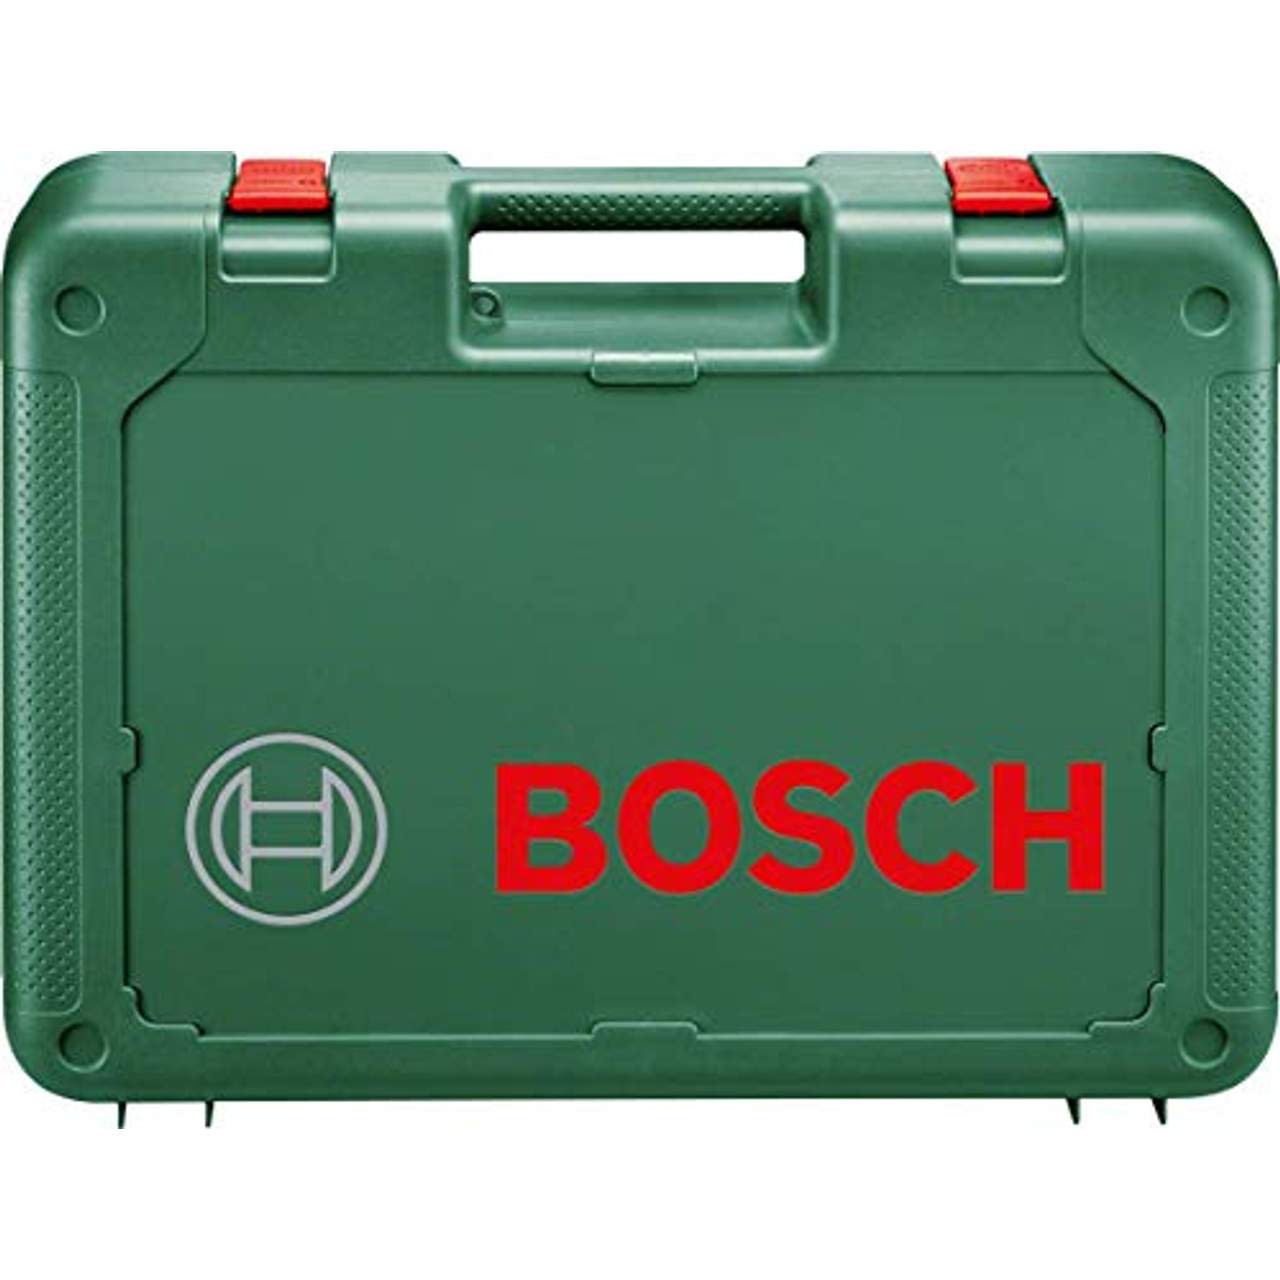 Bosch PBS 75 AE